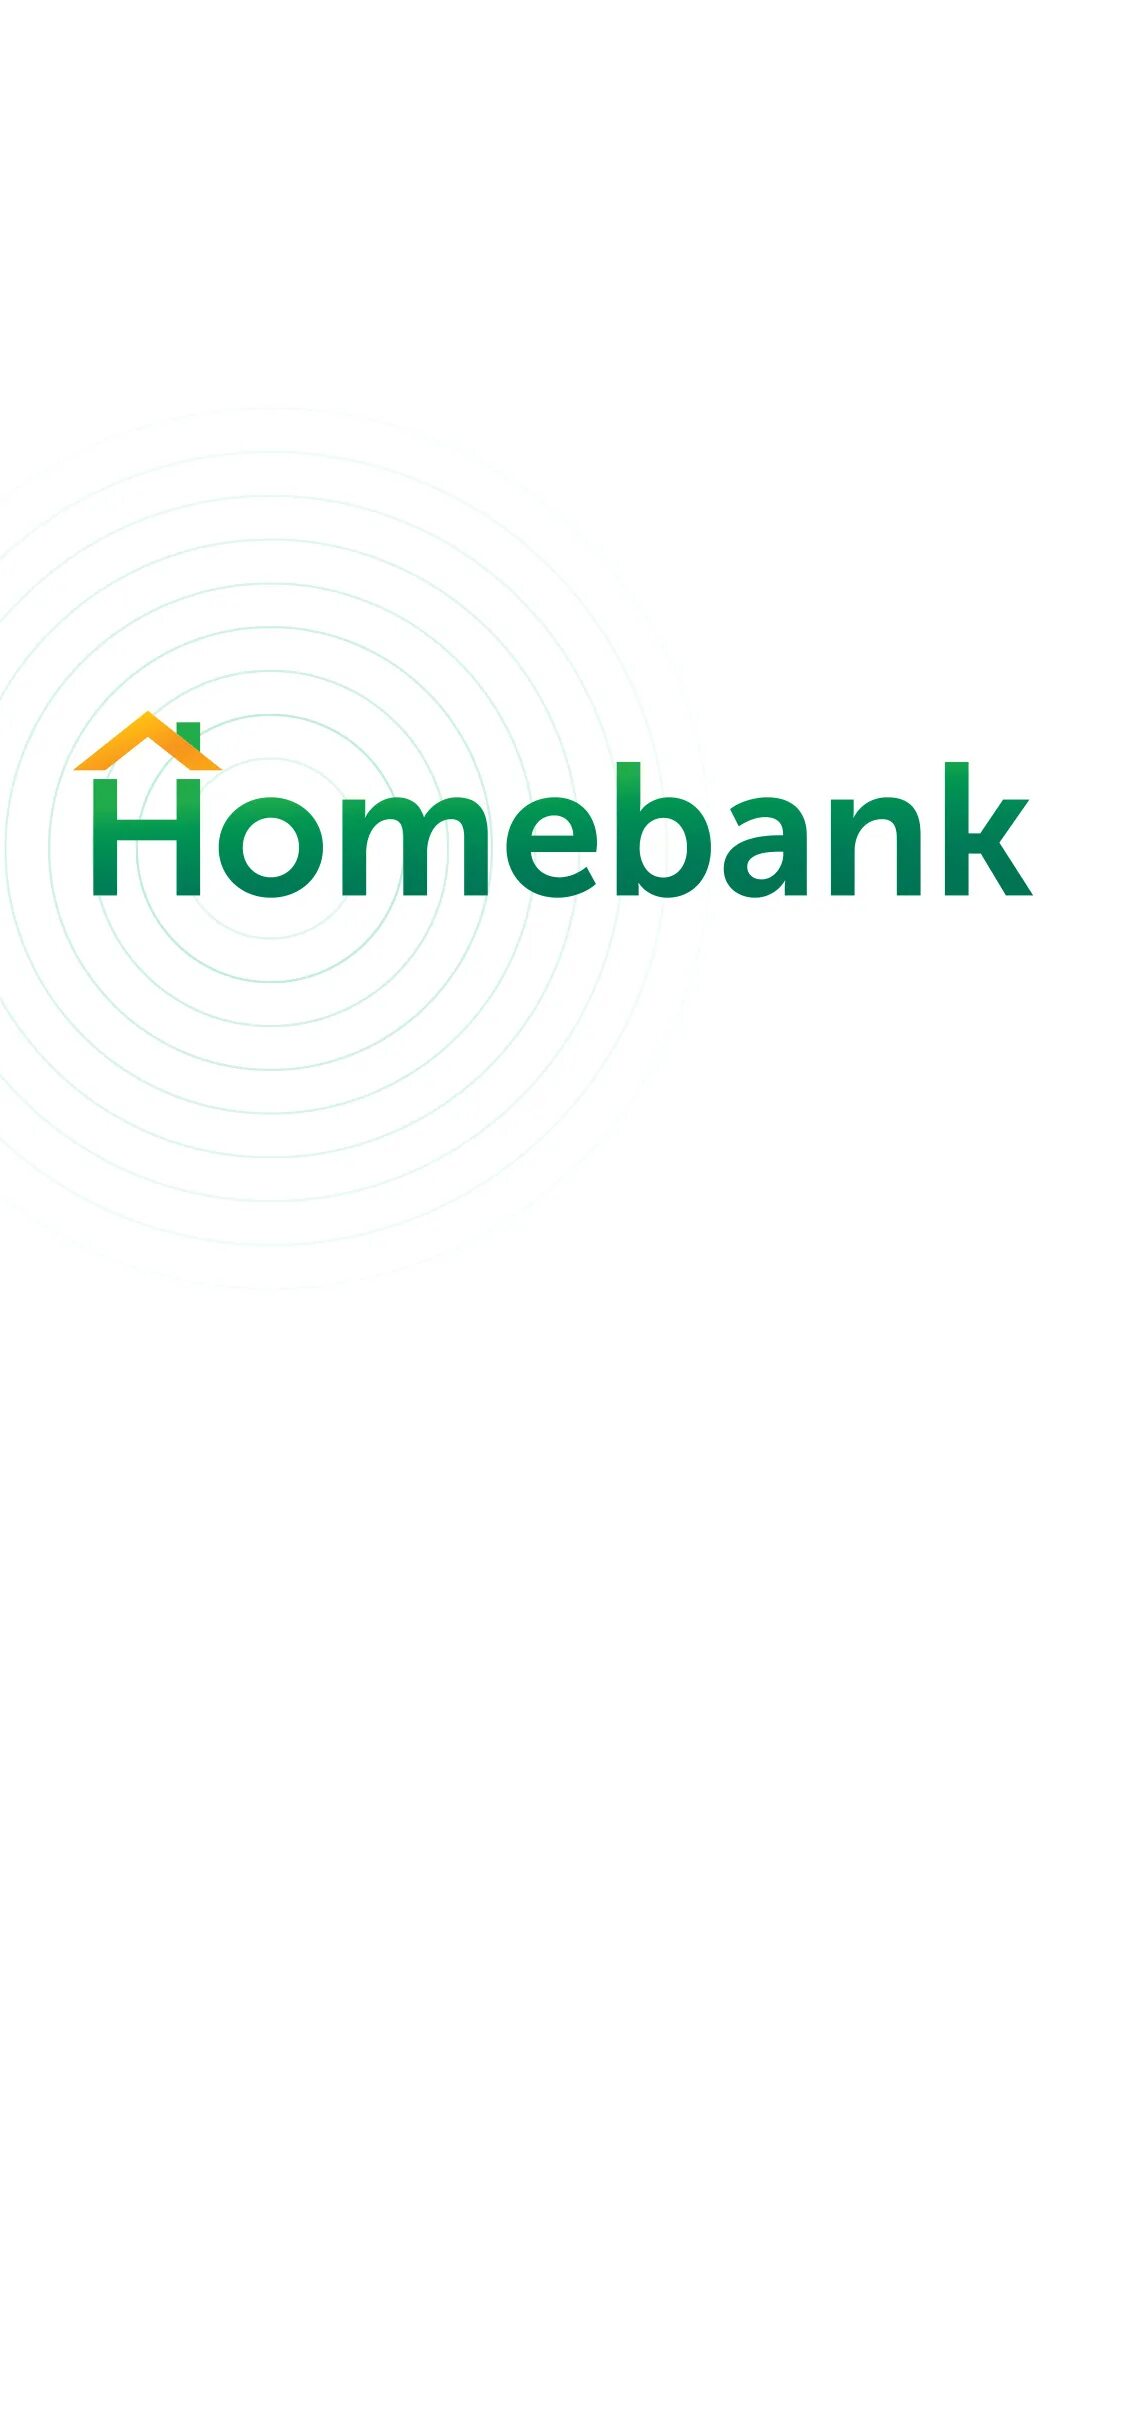 Homebank. Номе банк. Банк народный кредит. Логотип хоум банка.